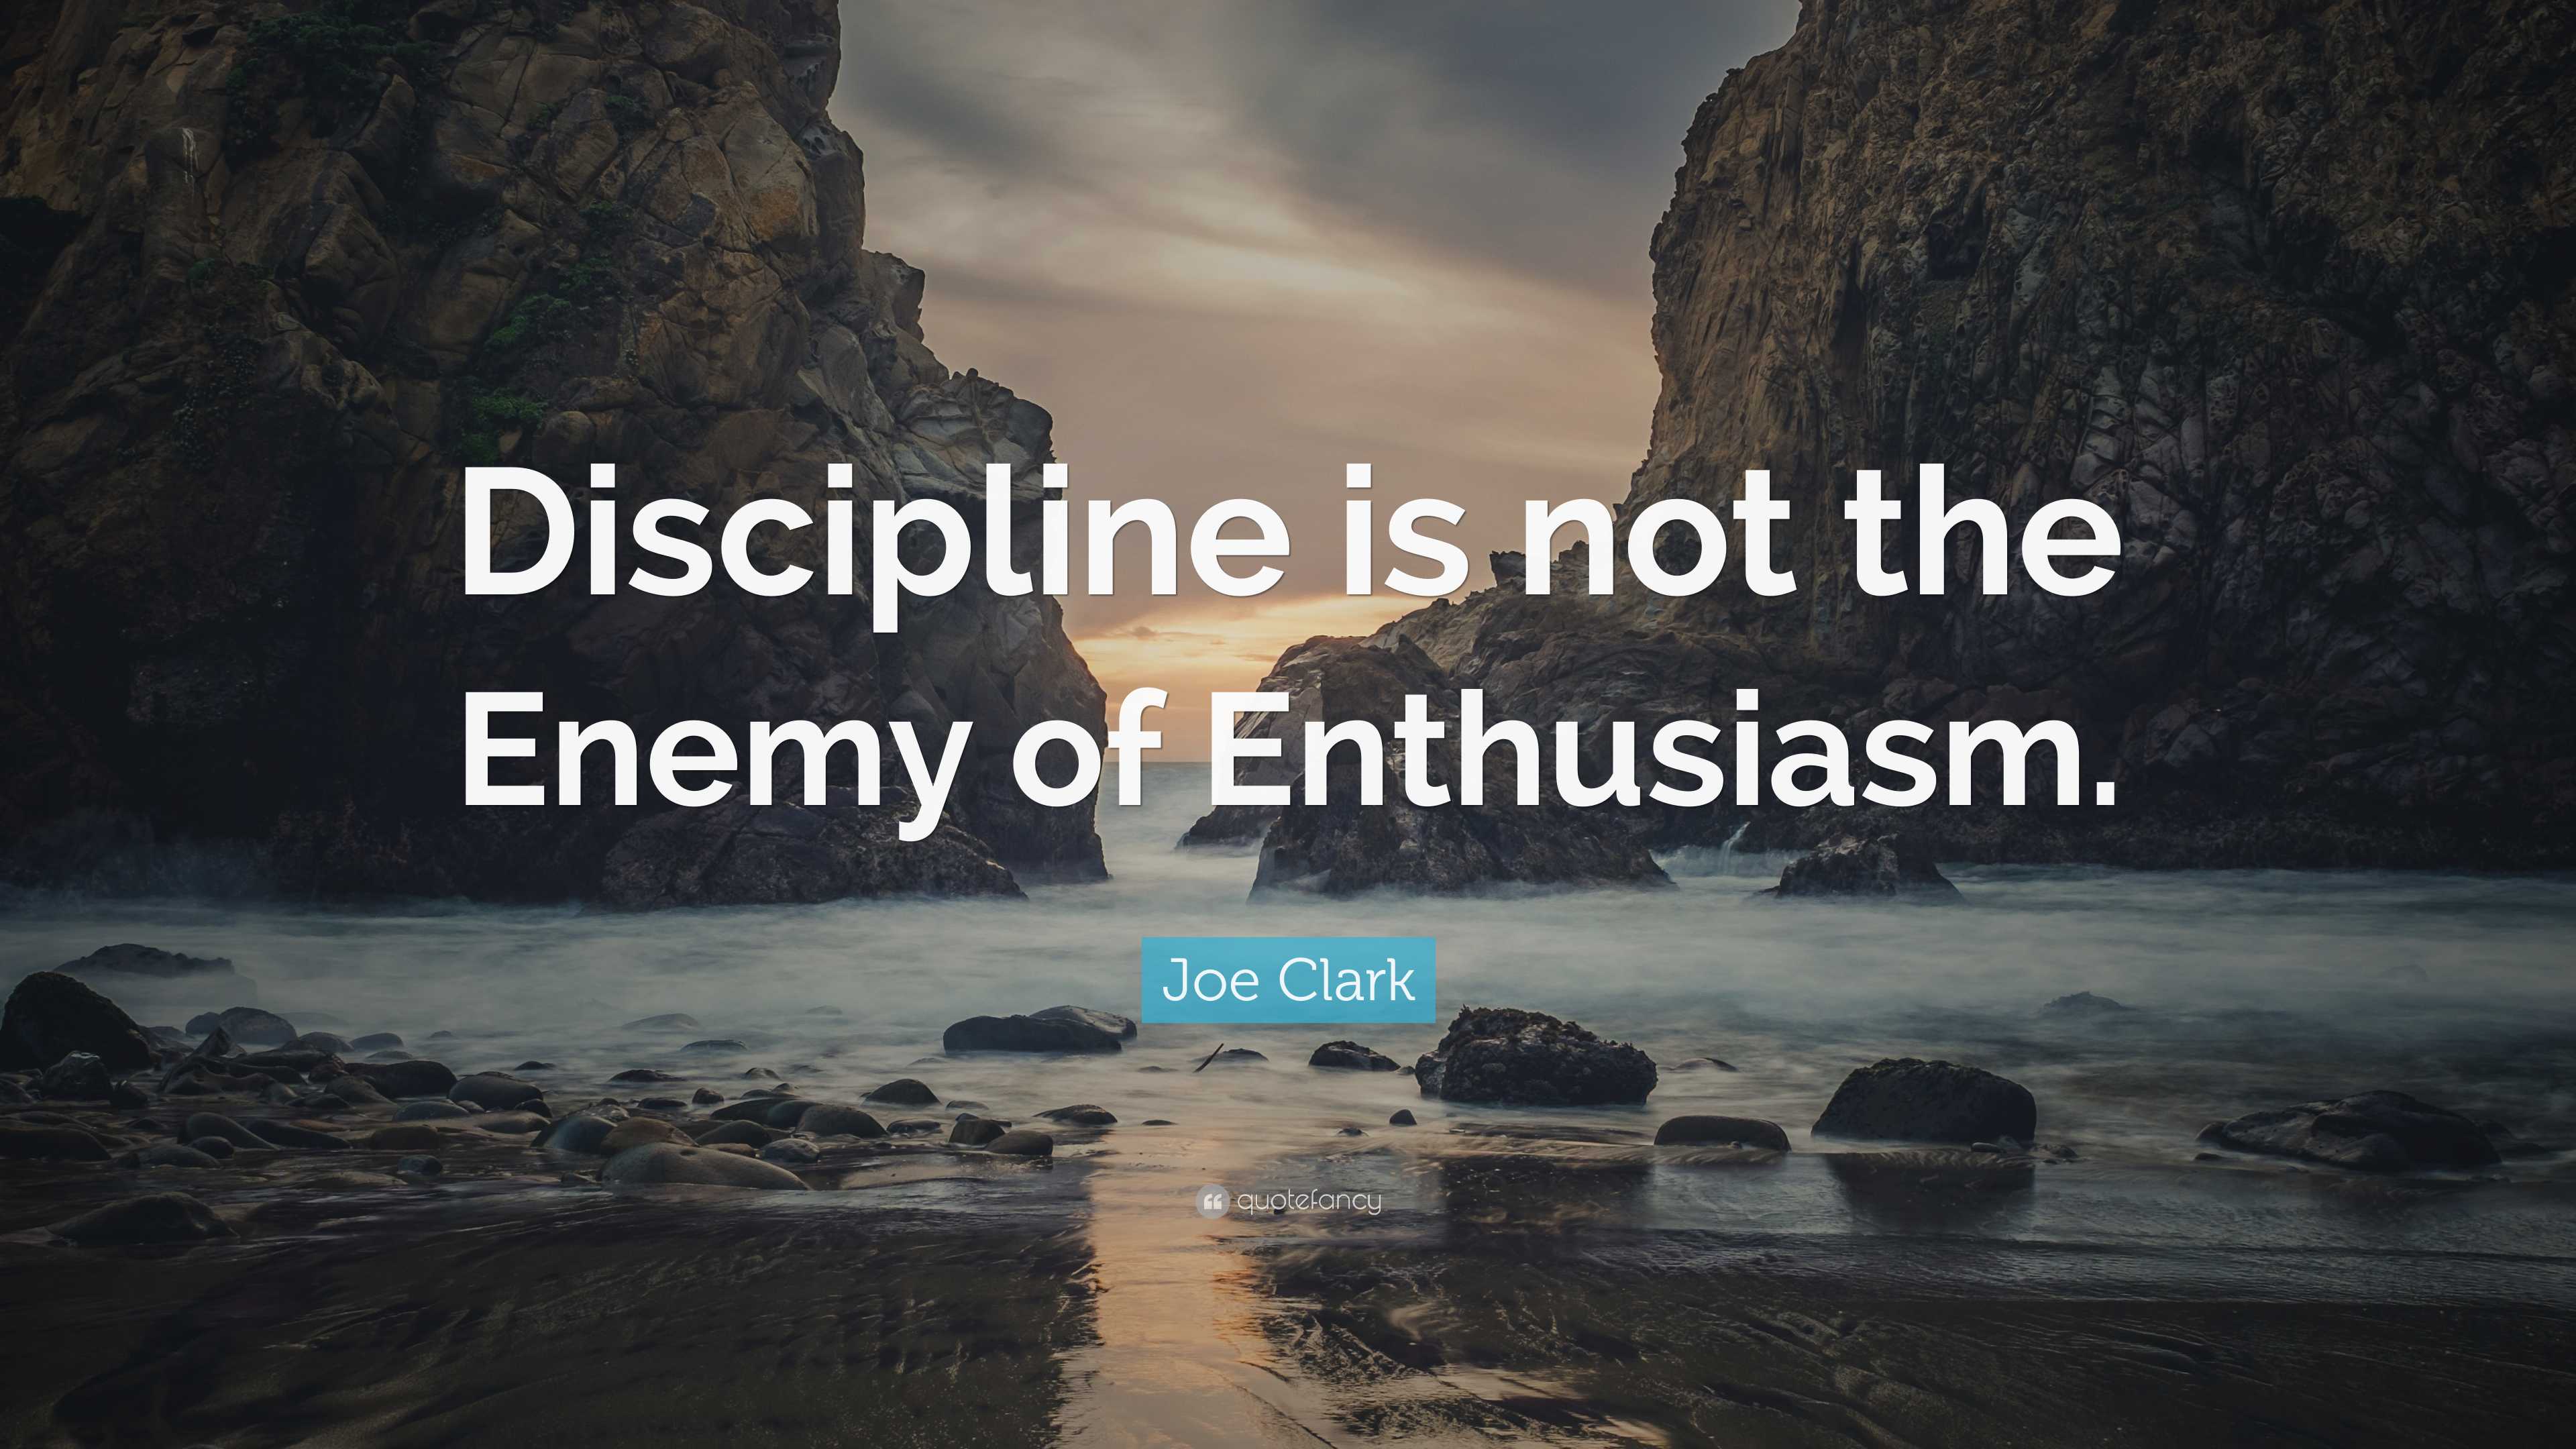 Joe Clark Quote: “Discipline is not the Enemy of Enthusiasm.”